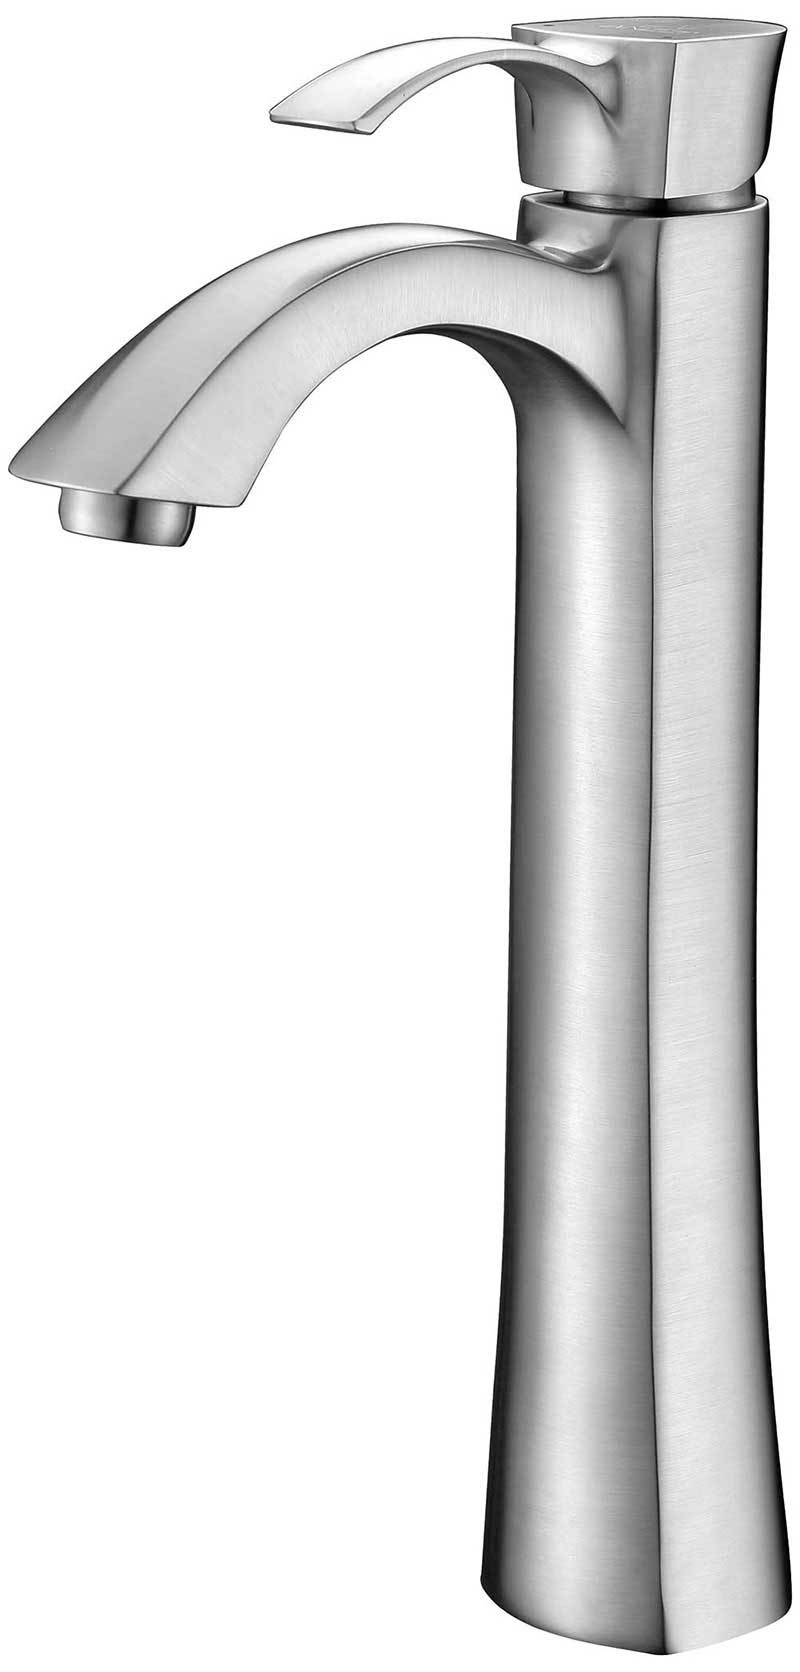 Anzzi Harmony Series Single Handle Vessel Sink Faucet in Brushed Nickel